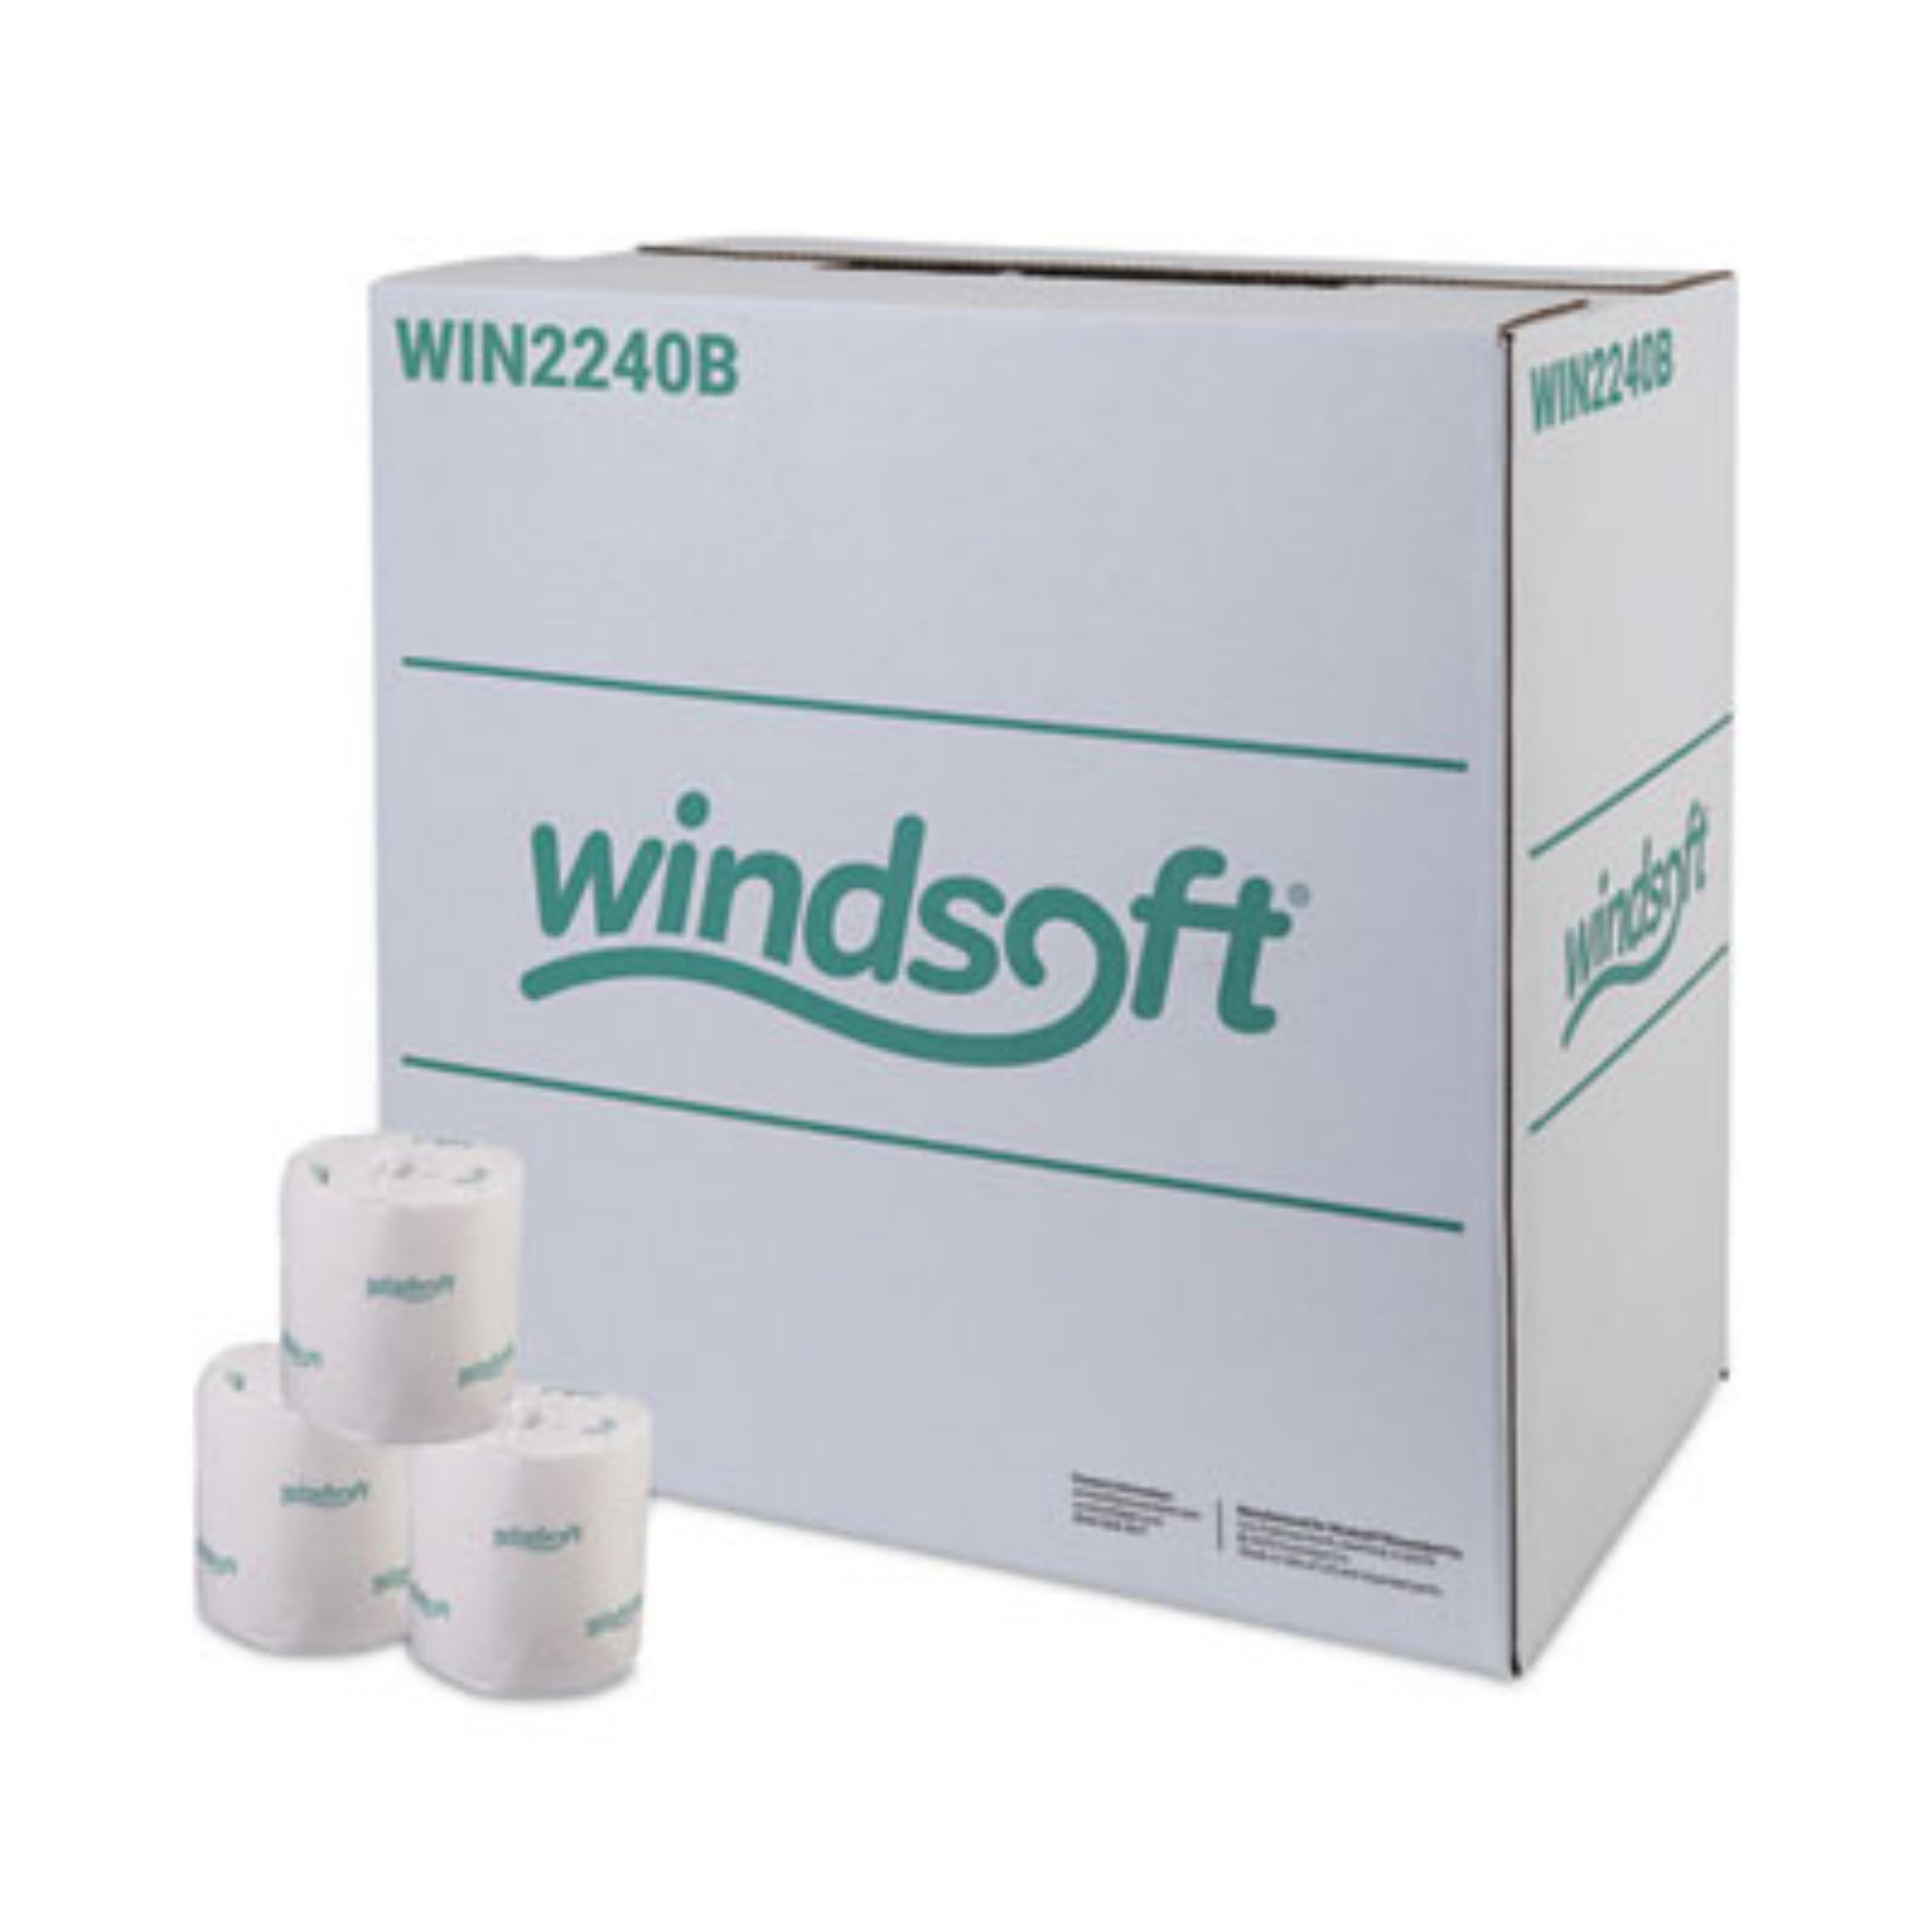 WINDSOFT WIN2240B Bath Tissue, In a Box